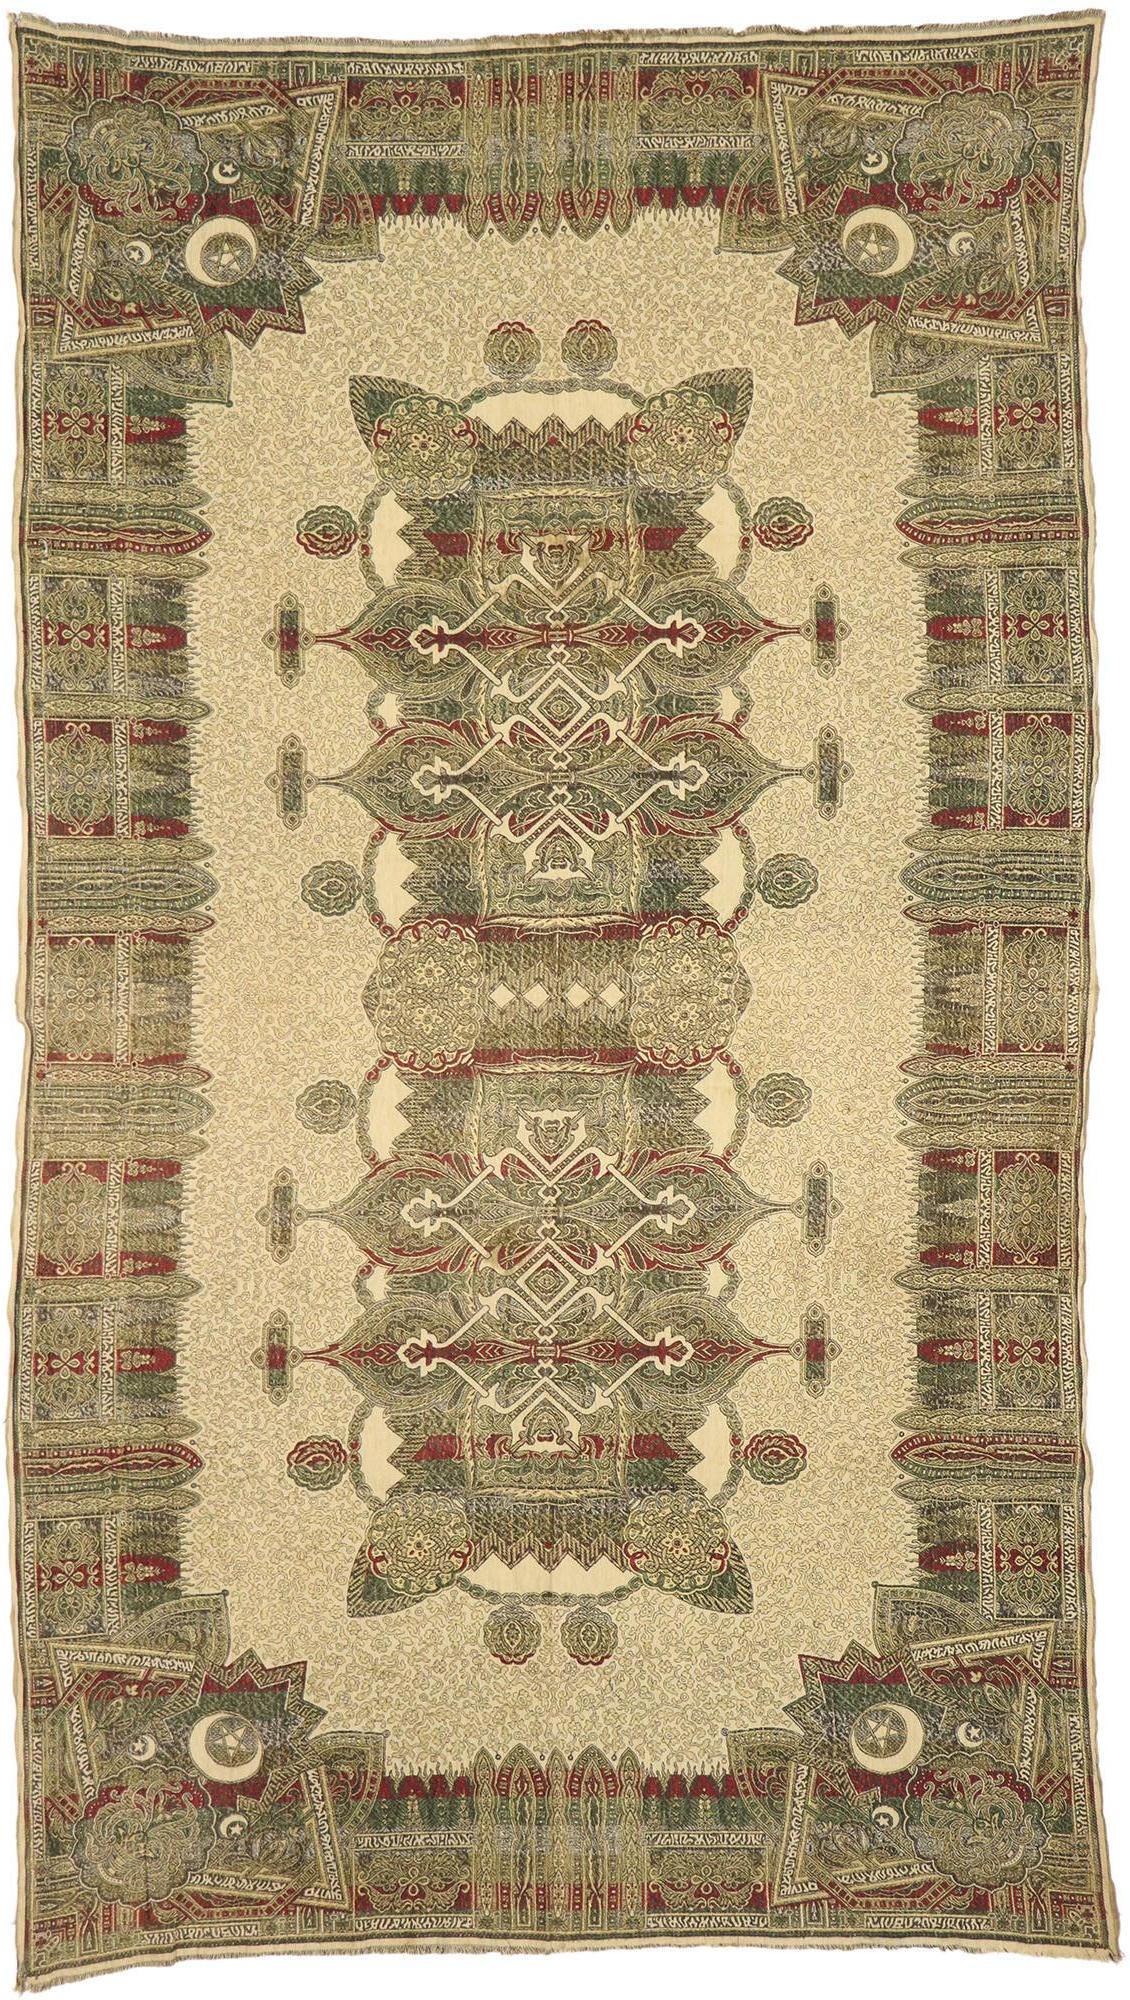 1930's Embroidered Granada Spanish Textile For Sale